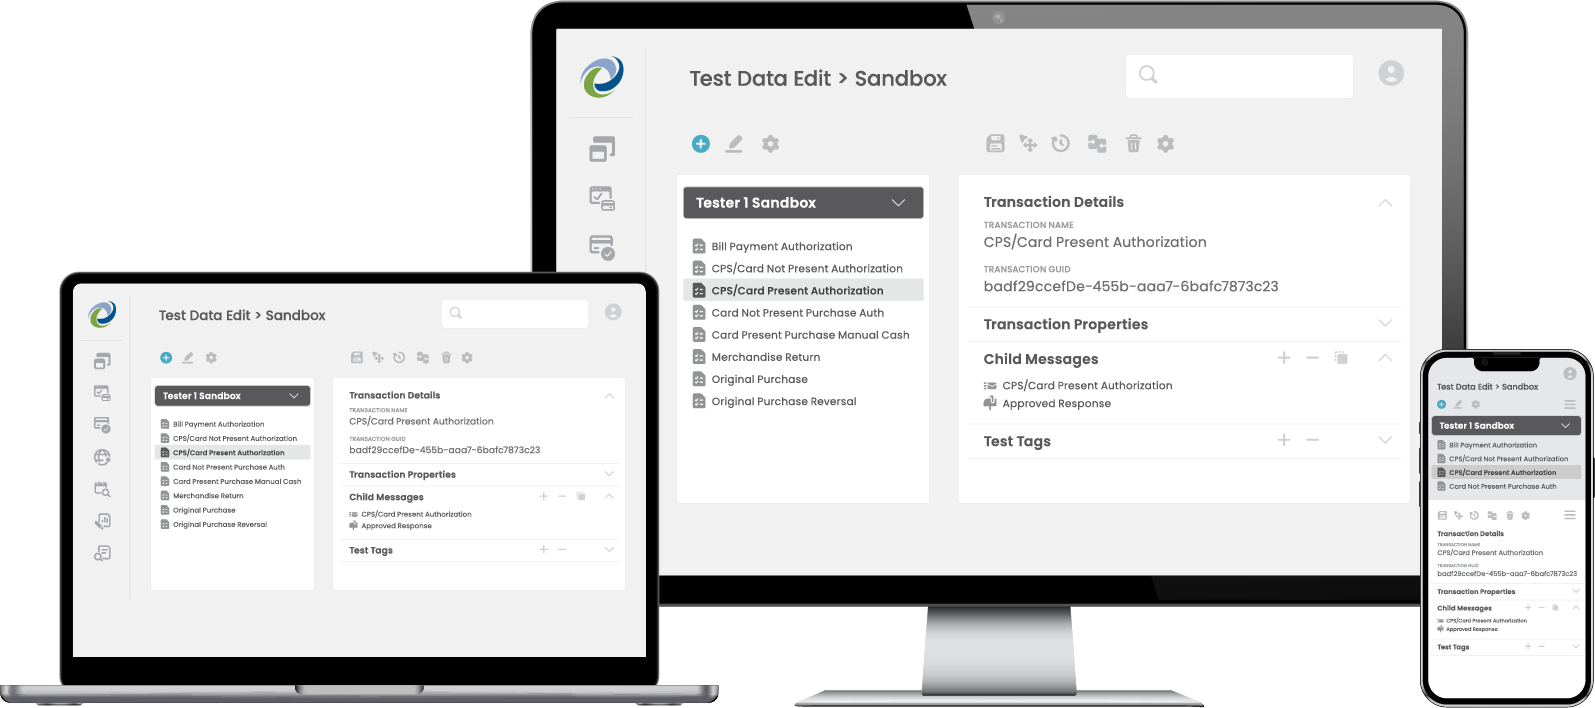 WebFT-Test-Data-Edit-Sandbox-Responsive